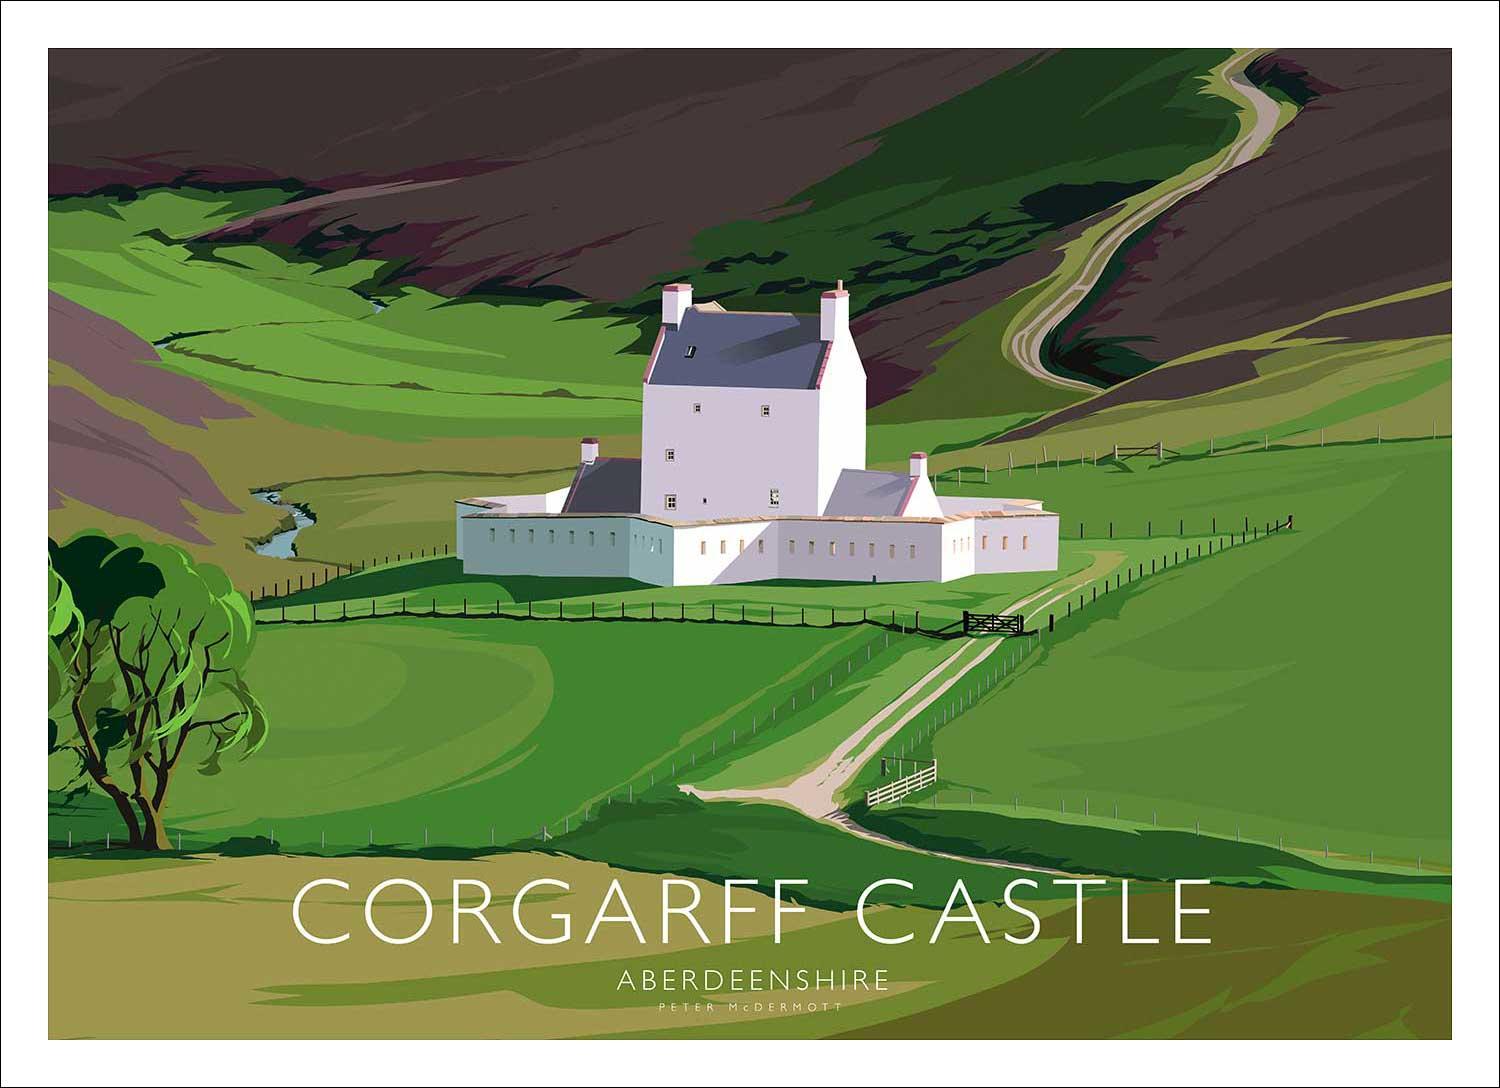 Corgarff Castle Art Print from an original illustration by artist Peter McDermott